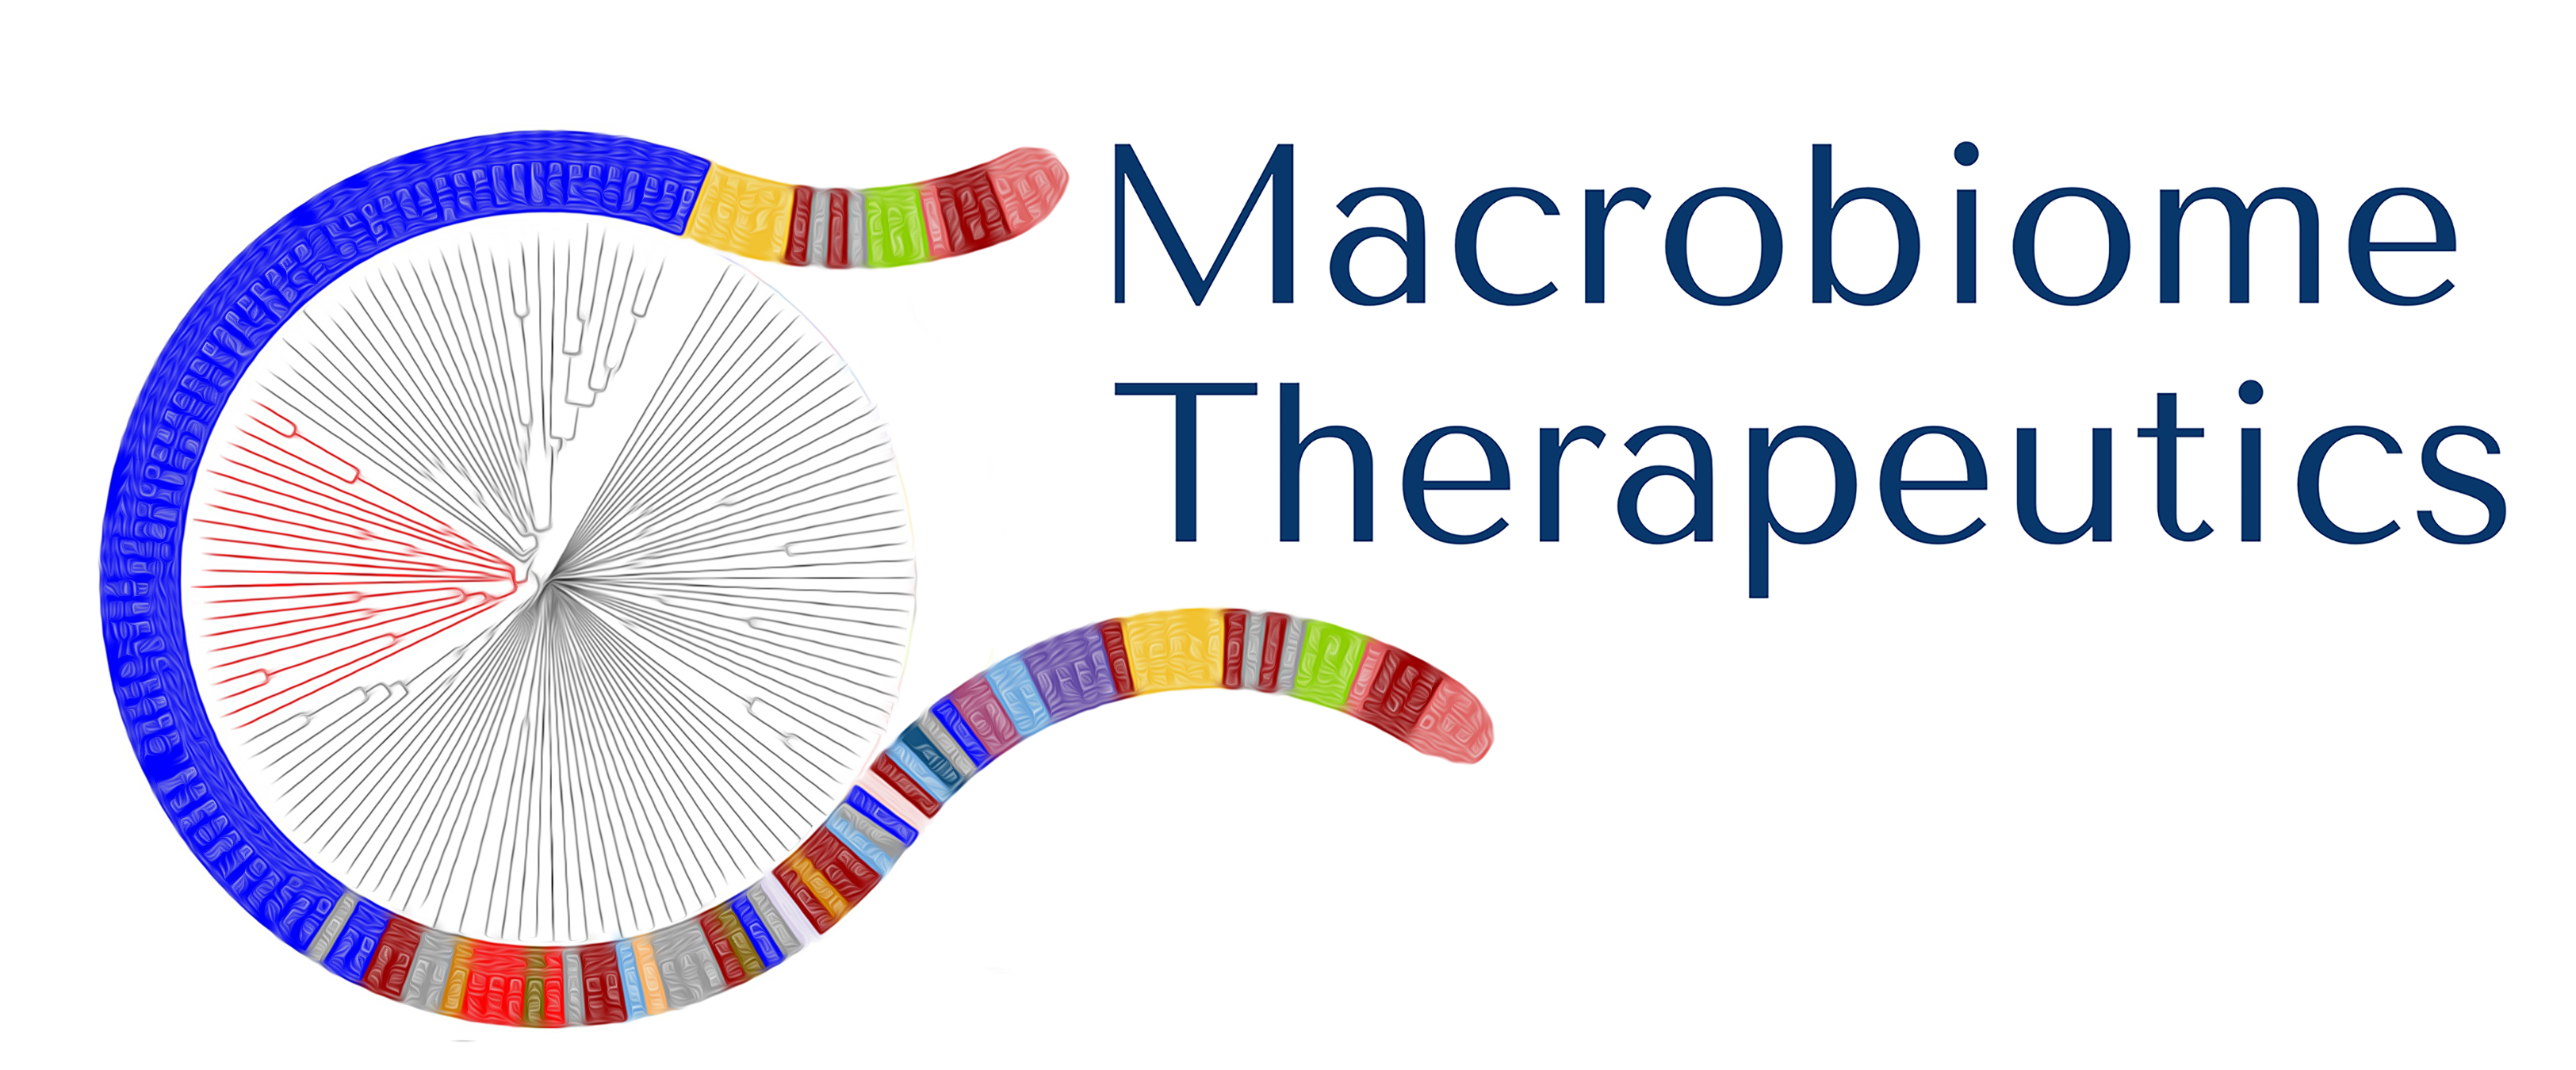 Macrobiome Therapeutics